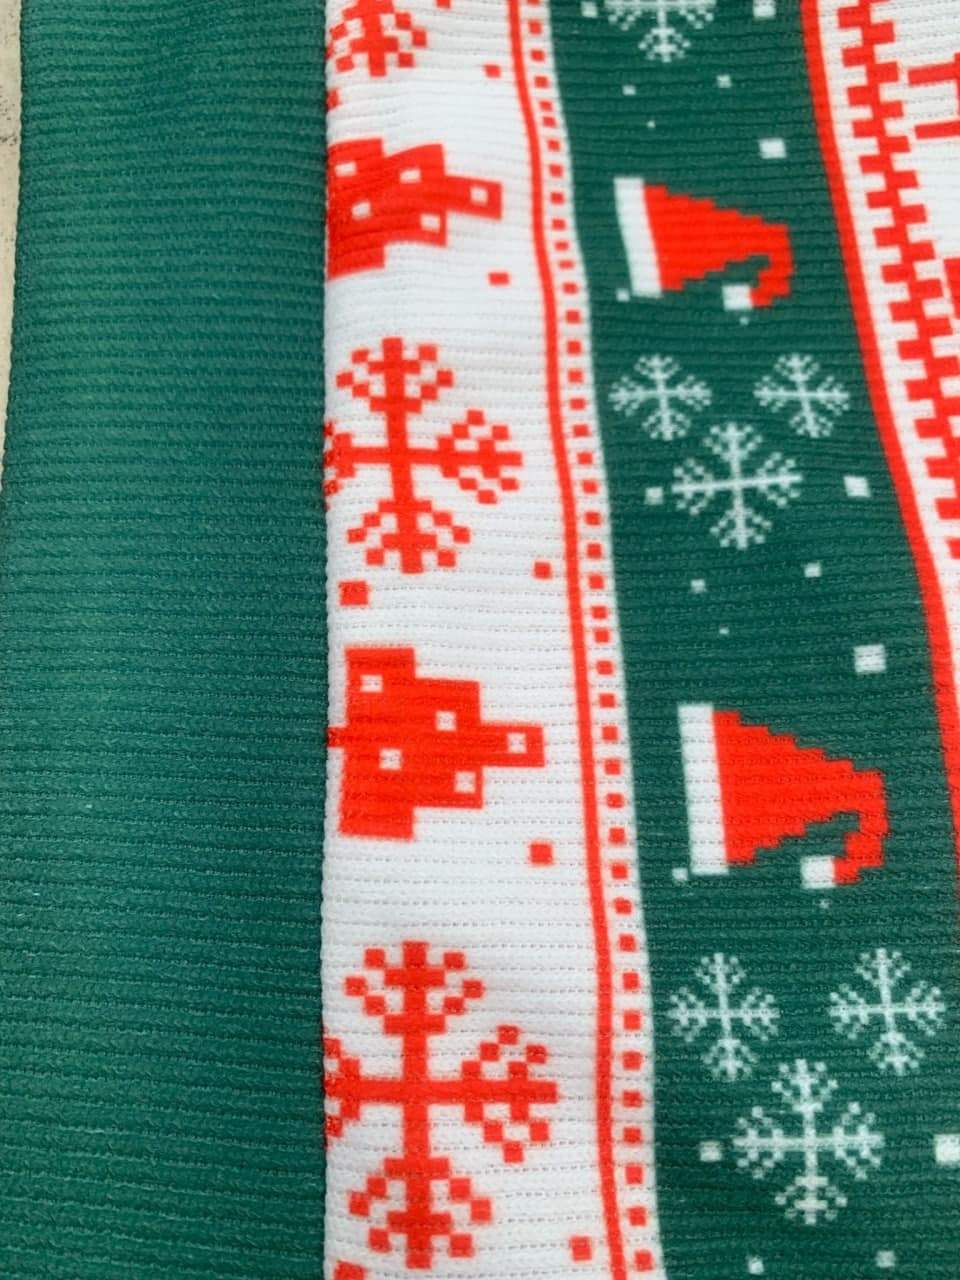 Levi x Eren Attack on Titan Anime Ugly Christmas Sweater Xmas Gift